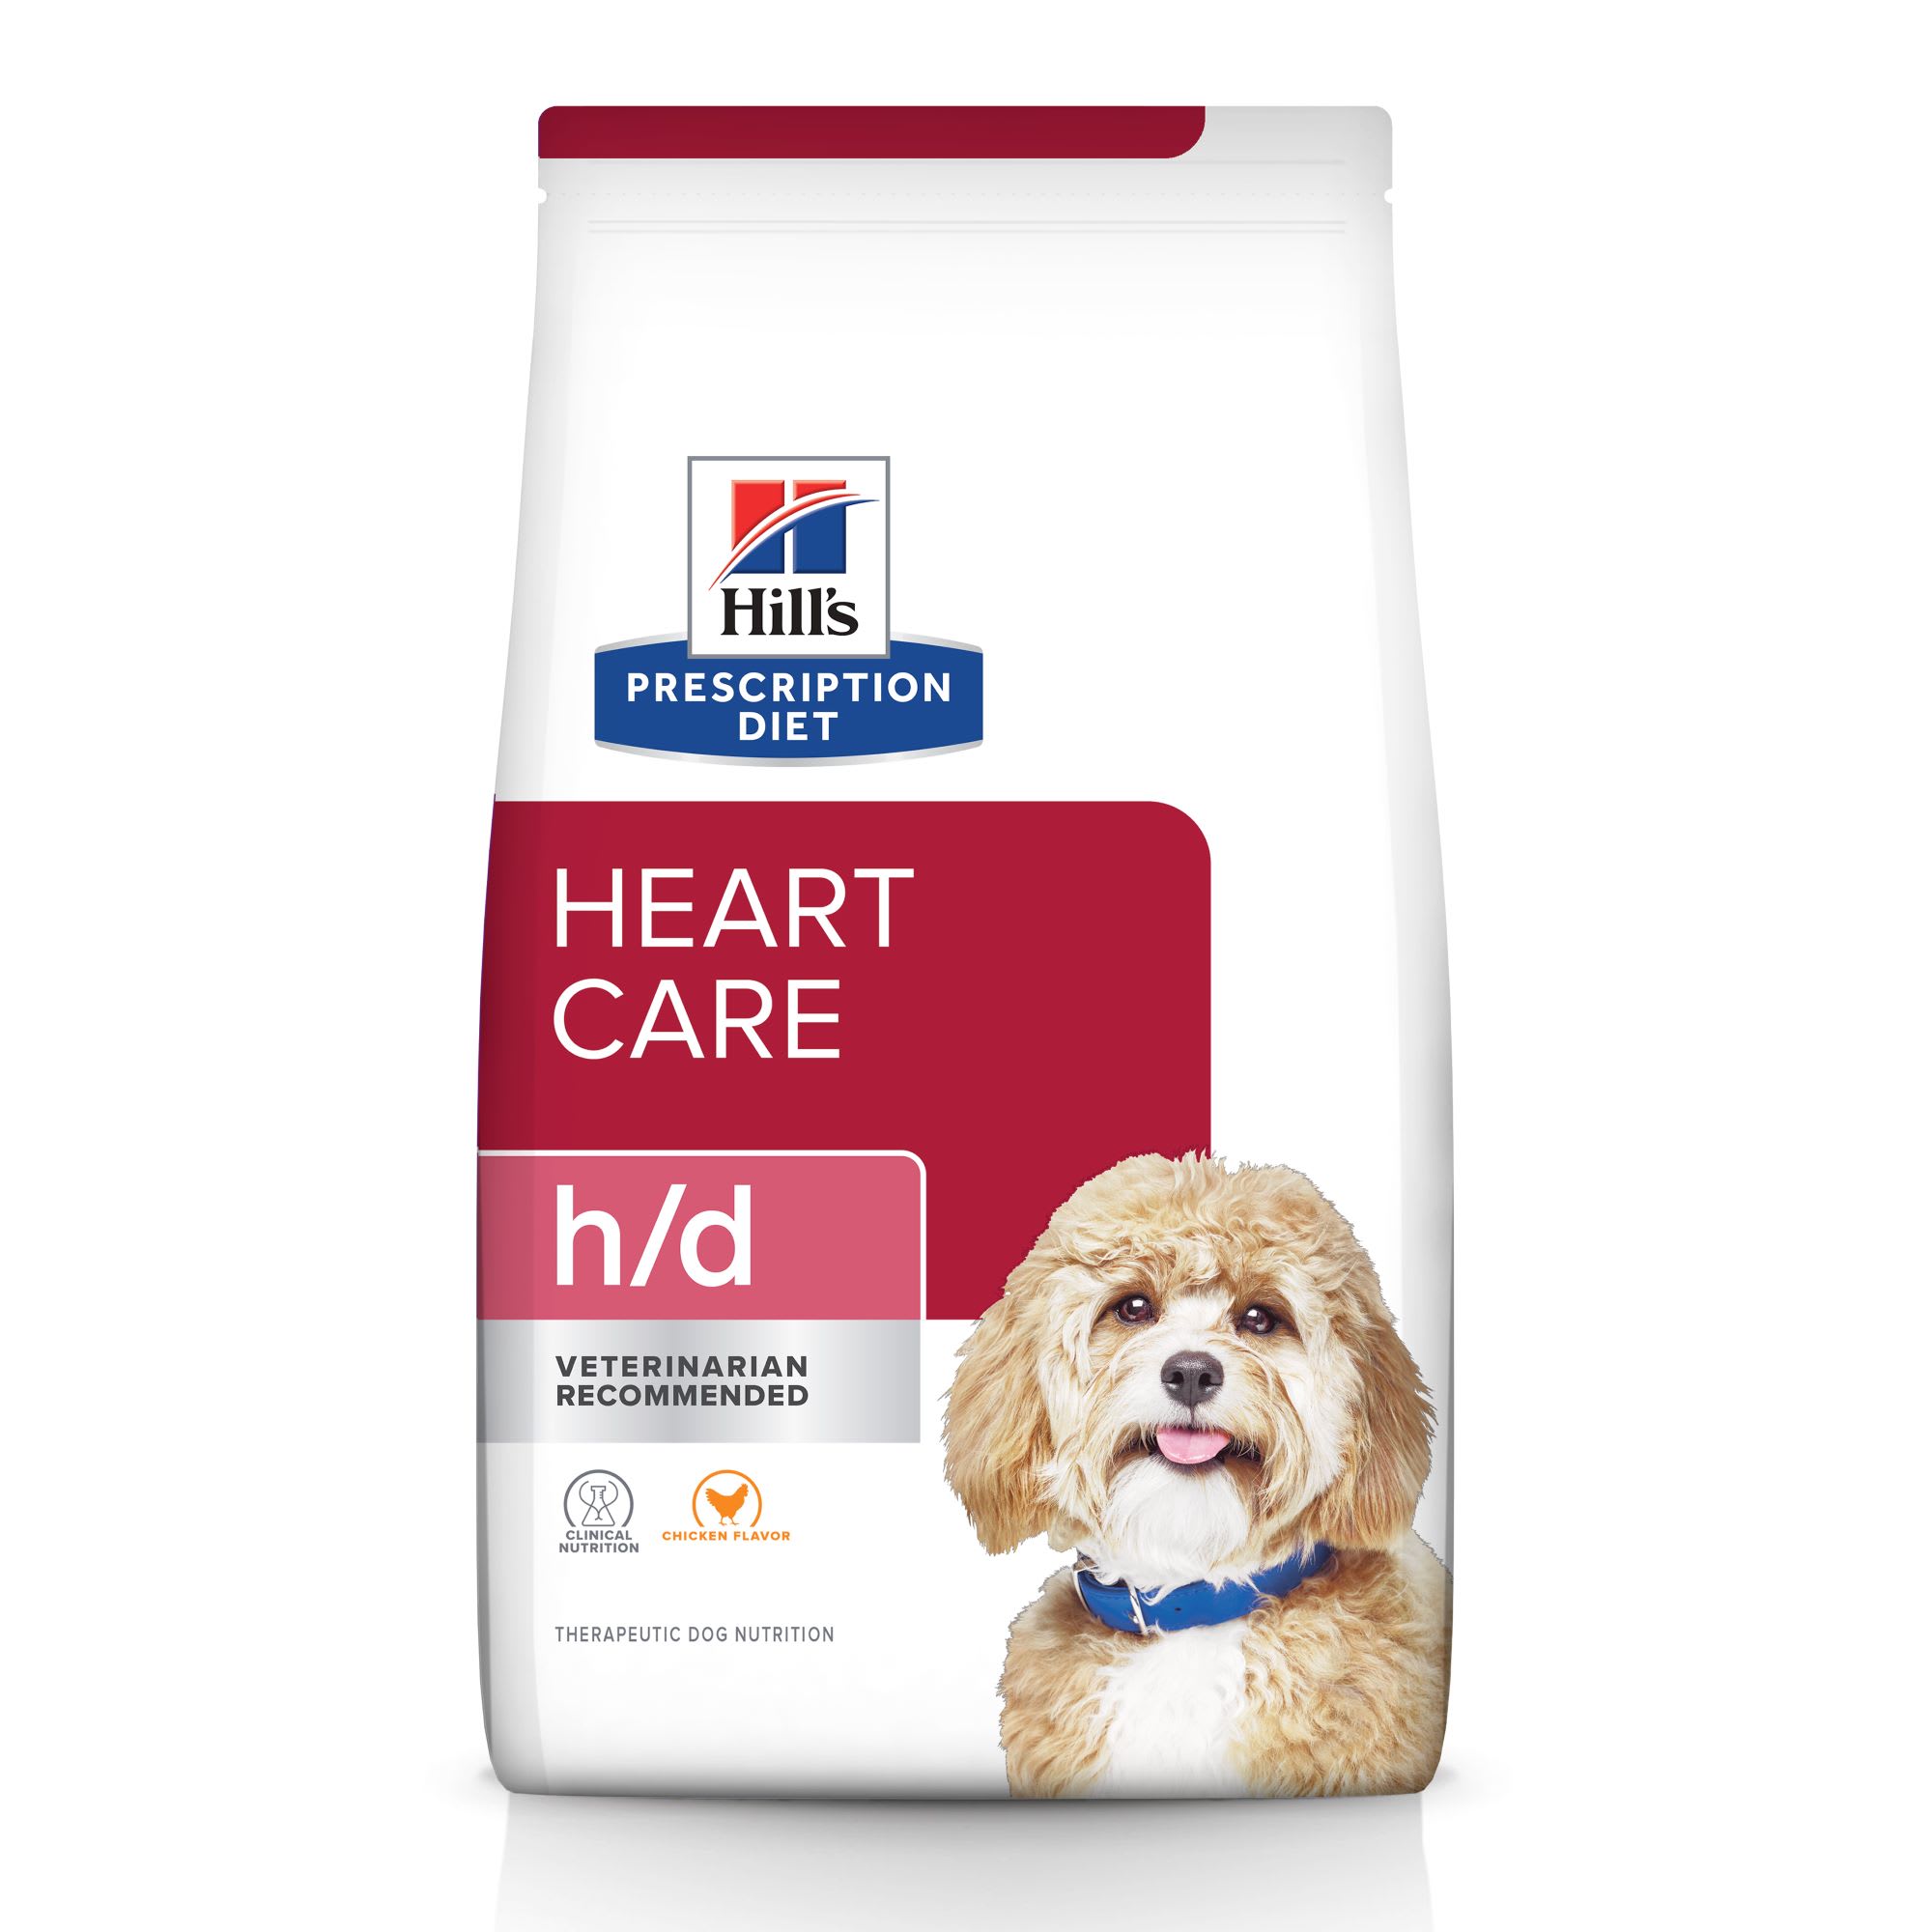 Photos - Dog Food Hills Hill's Prescription Diet Hill's Prescription Diet h/d Heart Care Chicken F 